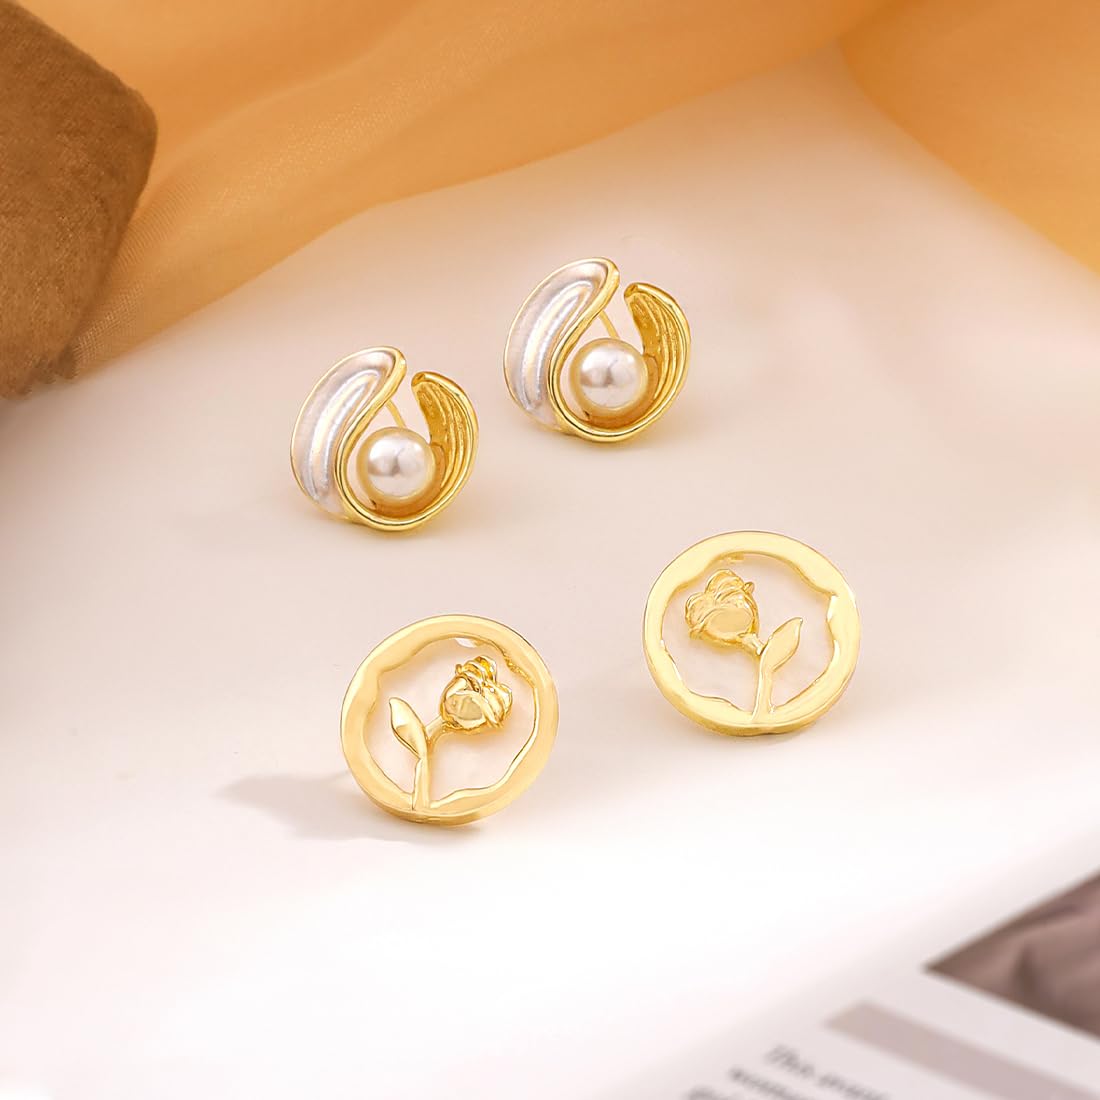 Pink Gemstone Earrings | Gold Earrings for Women | Gift Ideas for Her